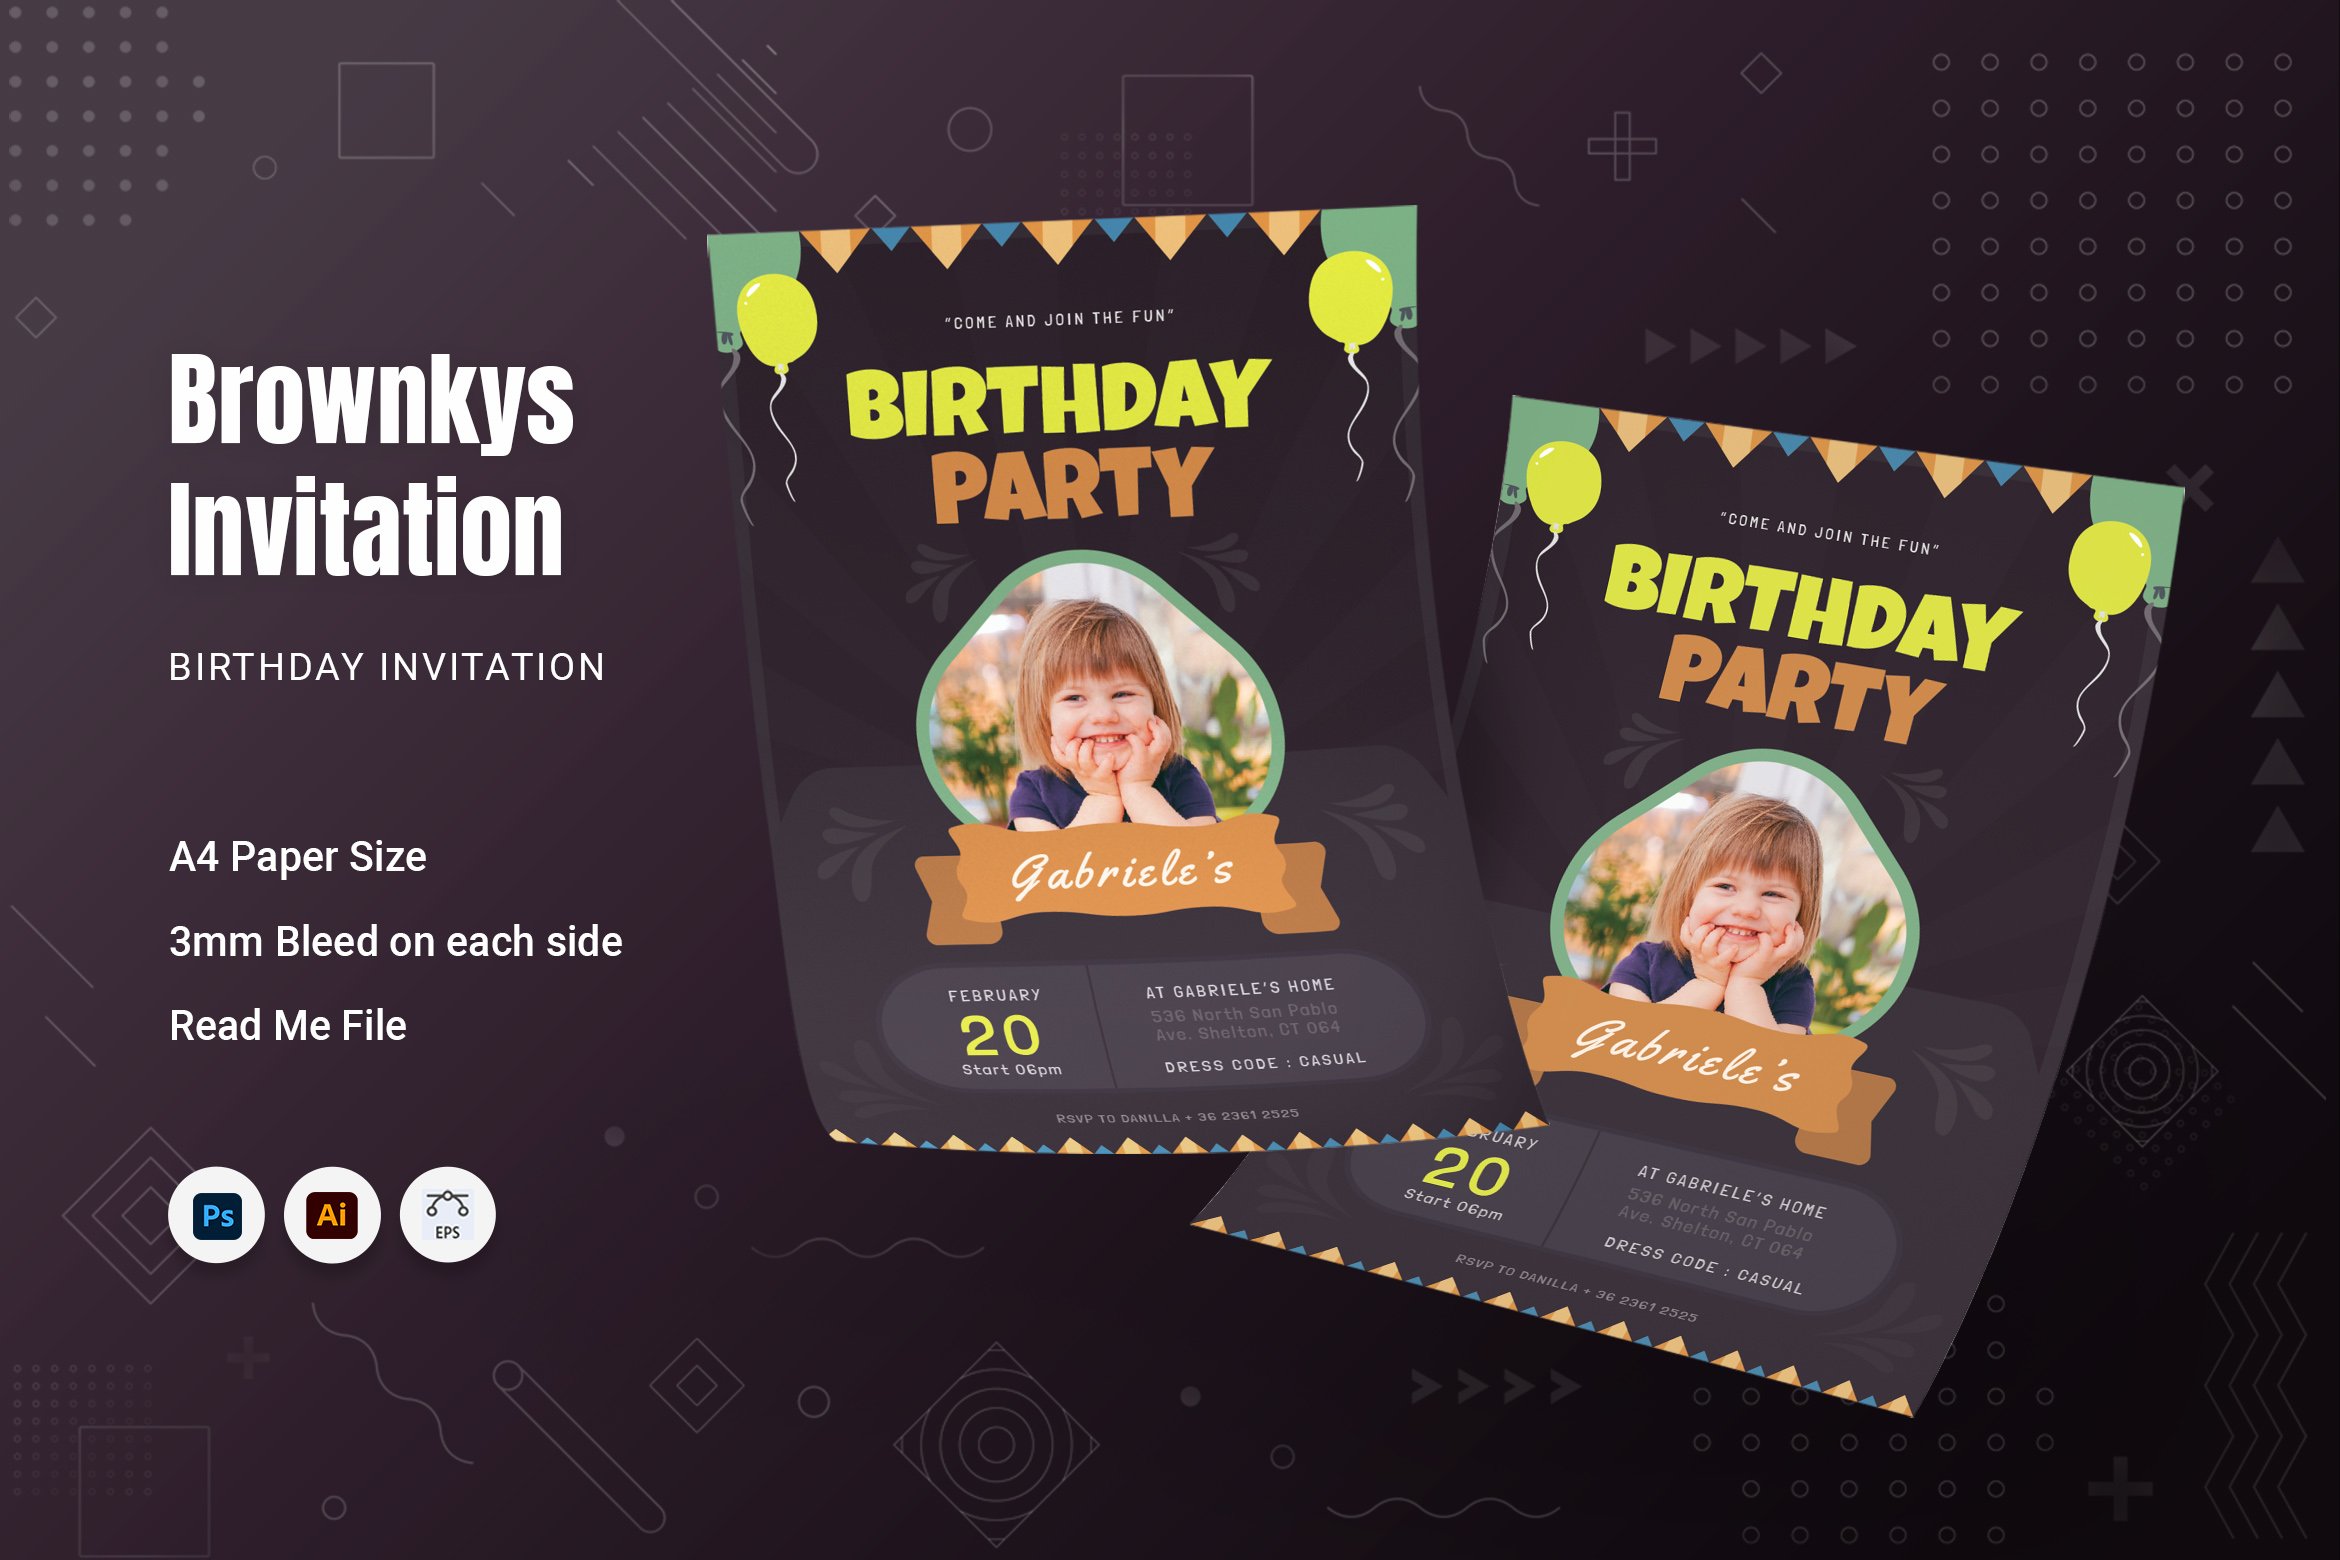 Brownkys Birthday Invitation cover image.